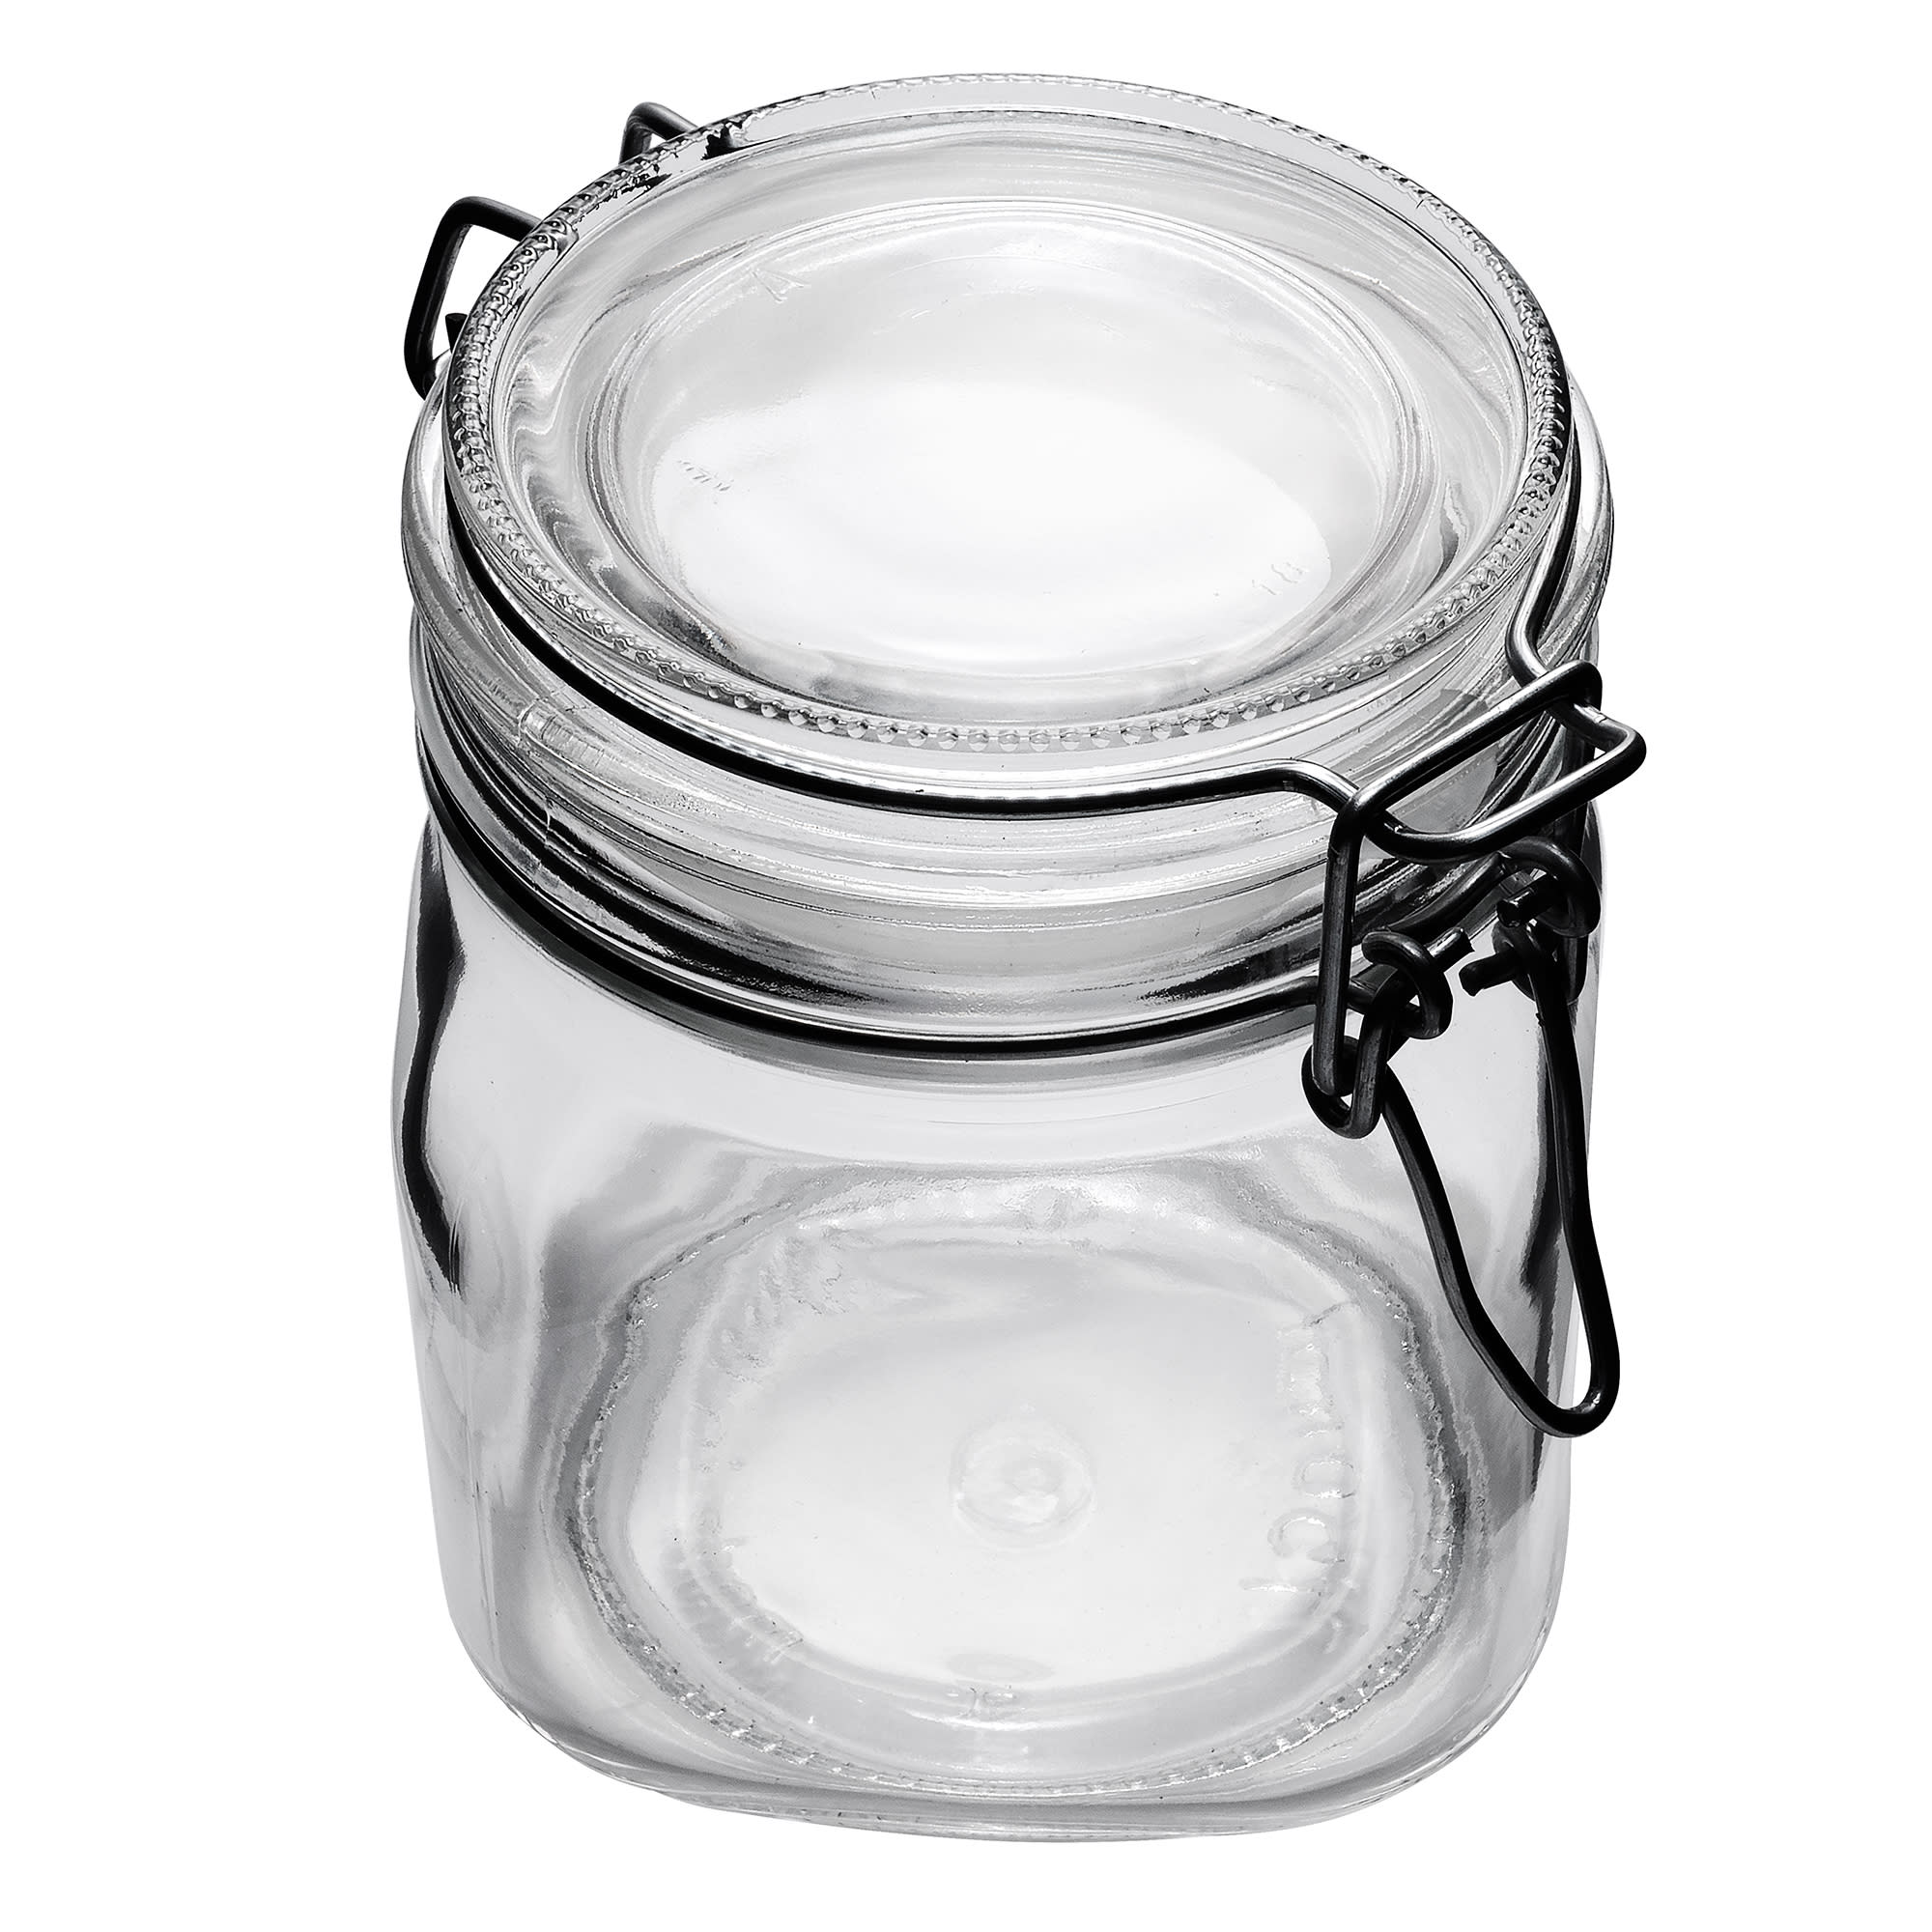 Choice 1 Gallon Glass Penny Candy Jar with Chrome Lid